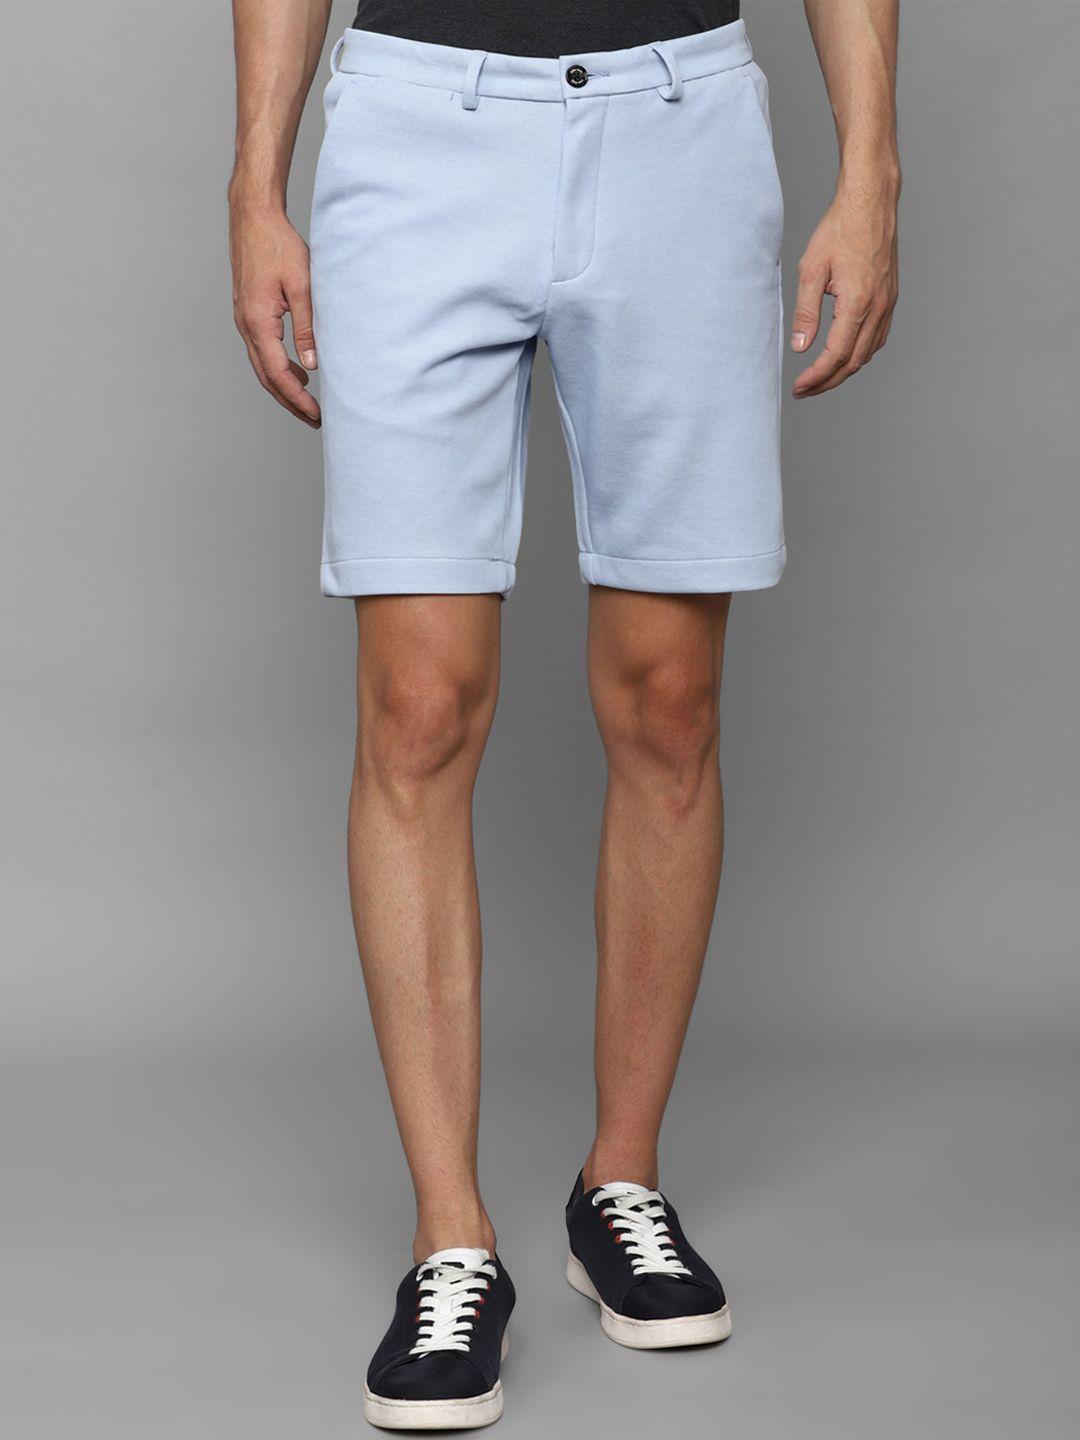 allen-solly-men-mid-rise-slim-fit-shorts